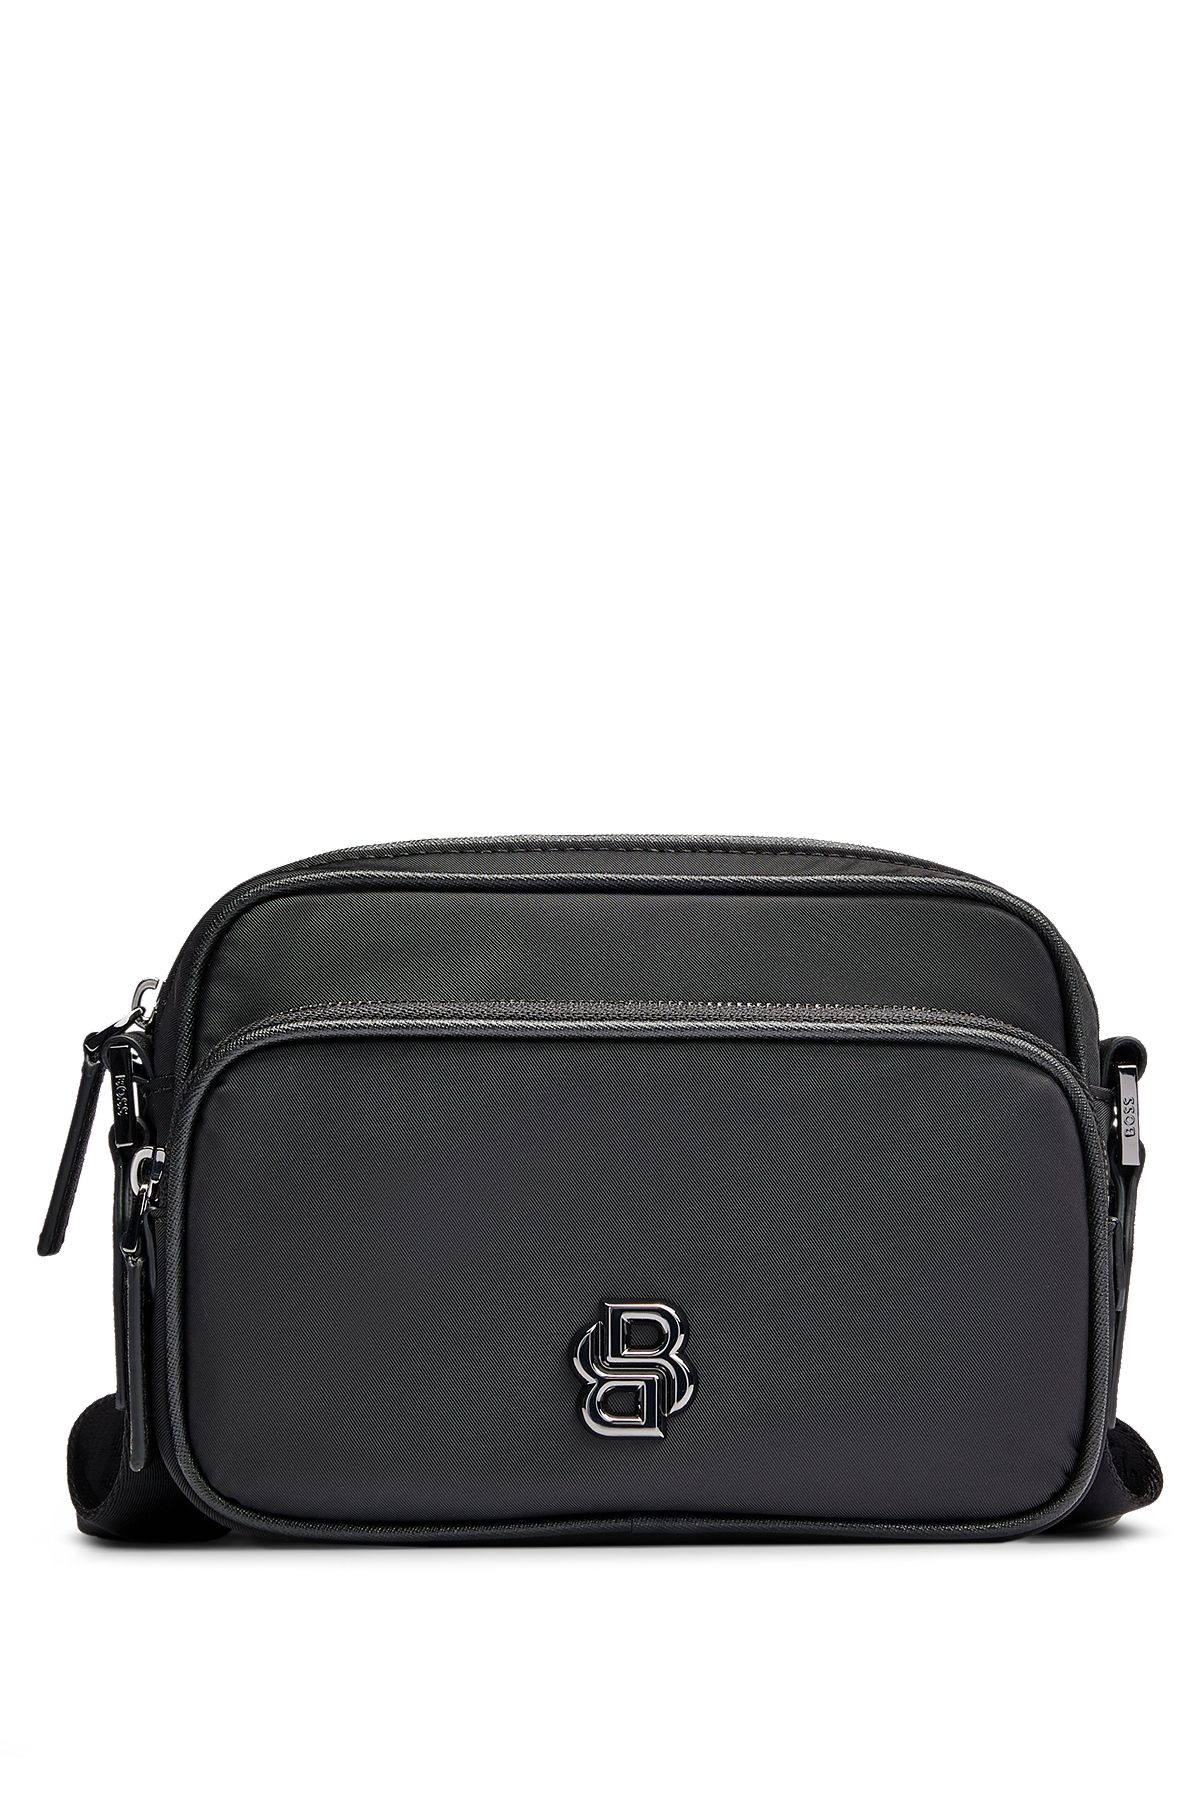 Crossbody bag with double-monogram hardware trim, Black